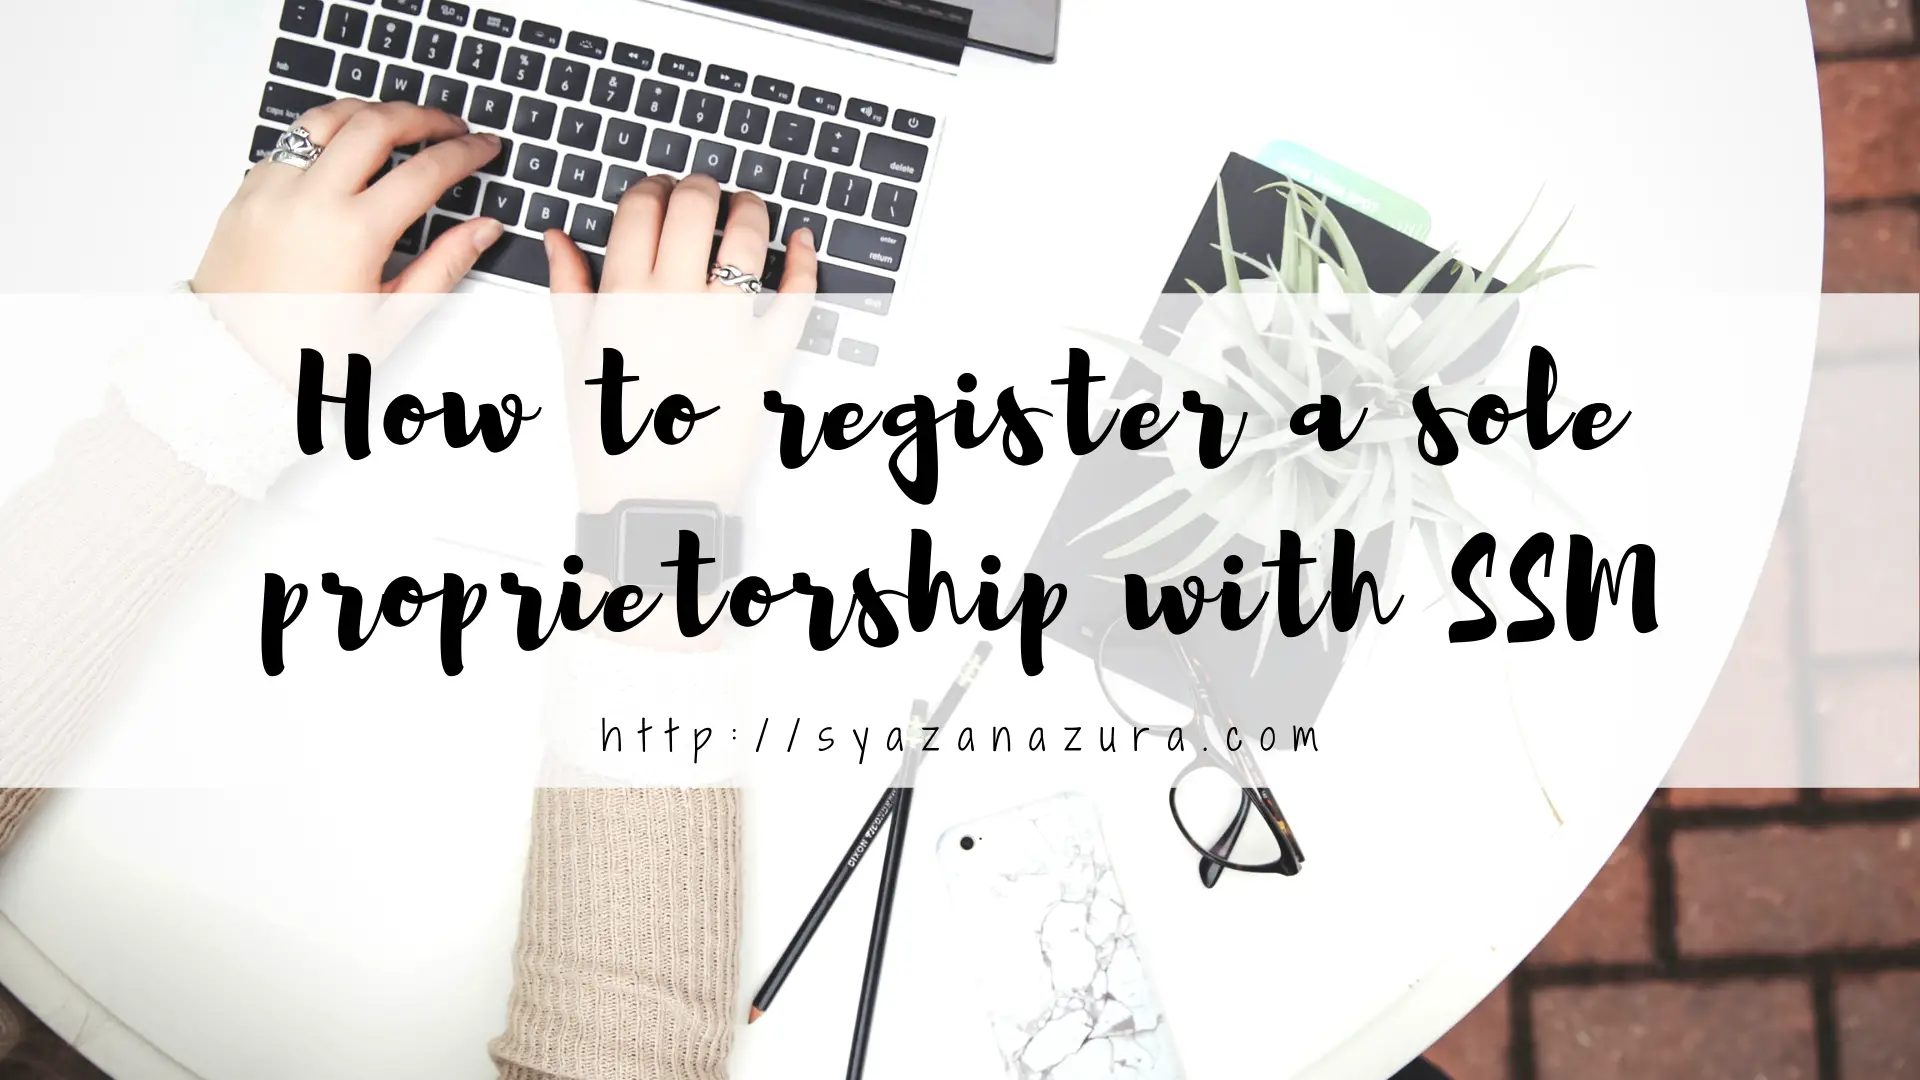 How to register a sole proprietorship with SSM.